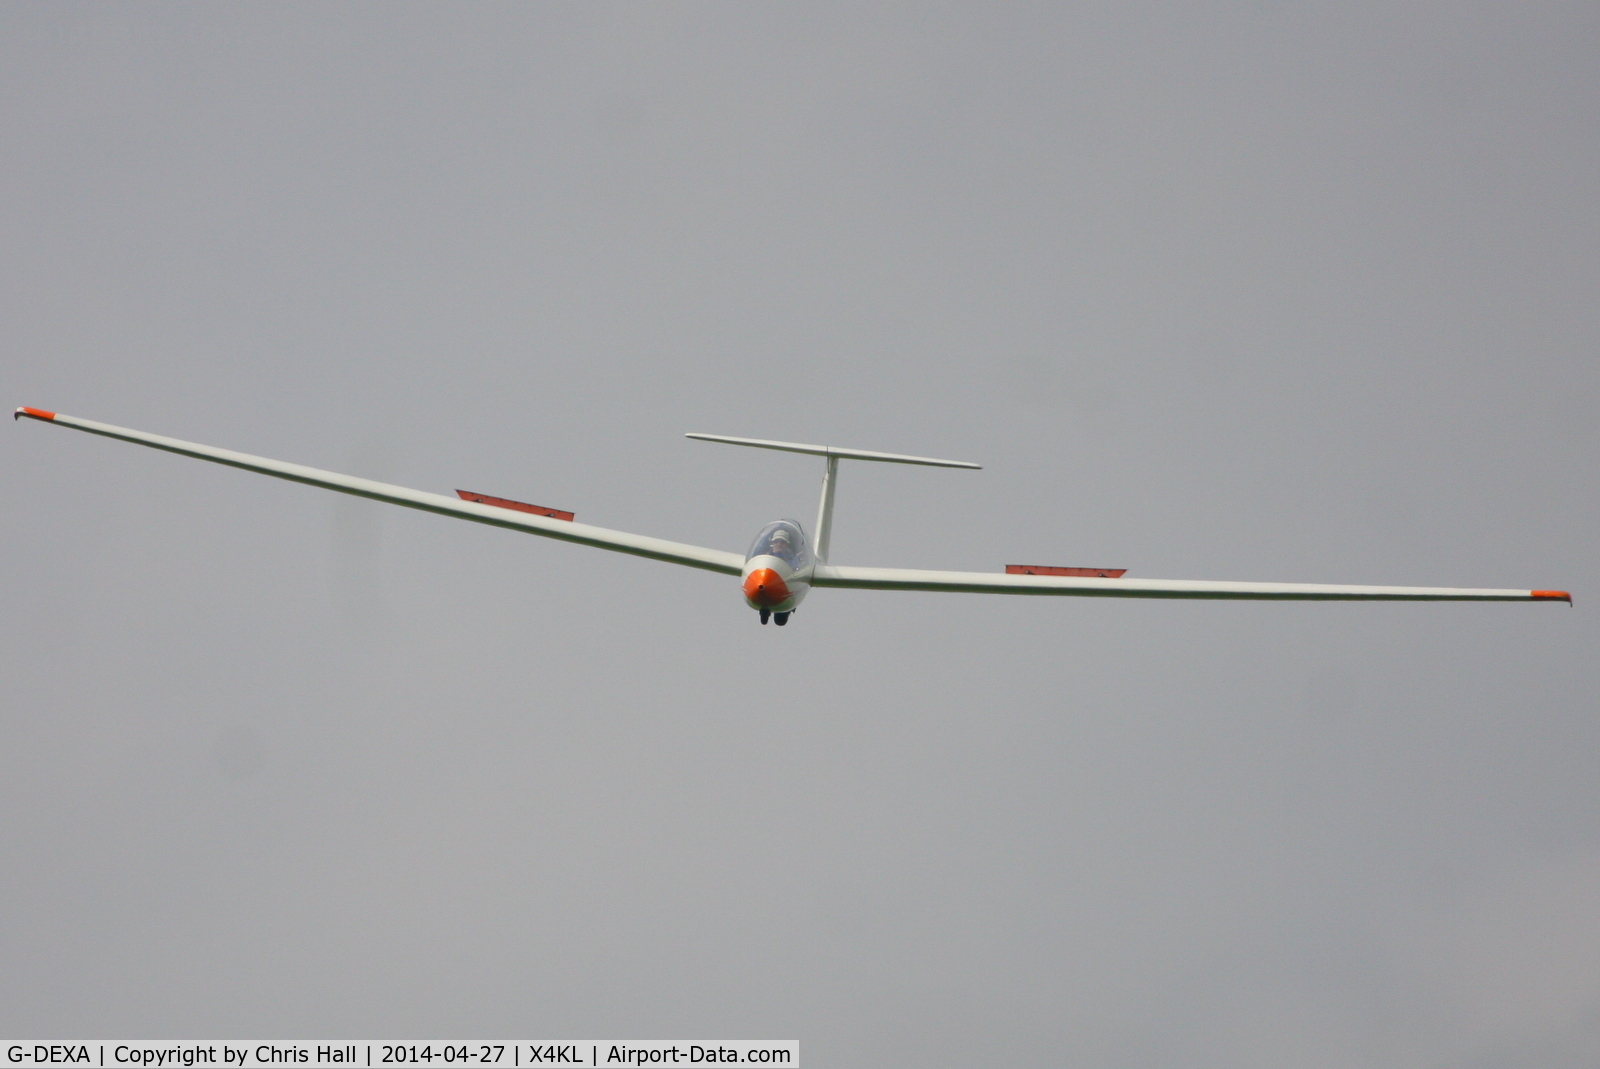 G-DEXA, 1984 Grob G-103A Viking TX1 C/N 33908-K-143, Trent Valley Gliding Club, Kirton in Lindsay